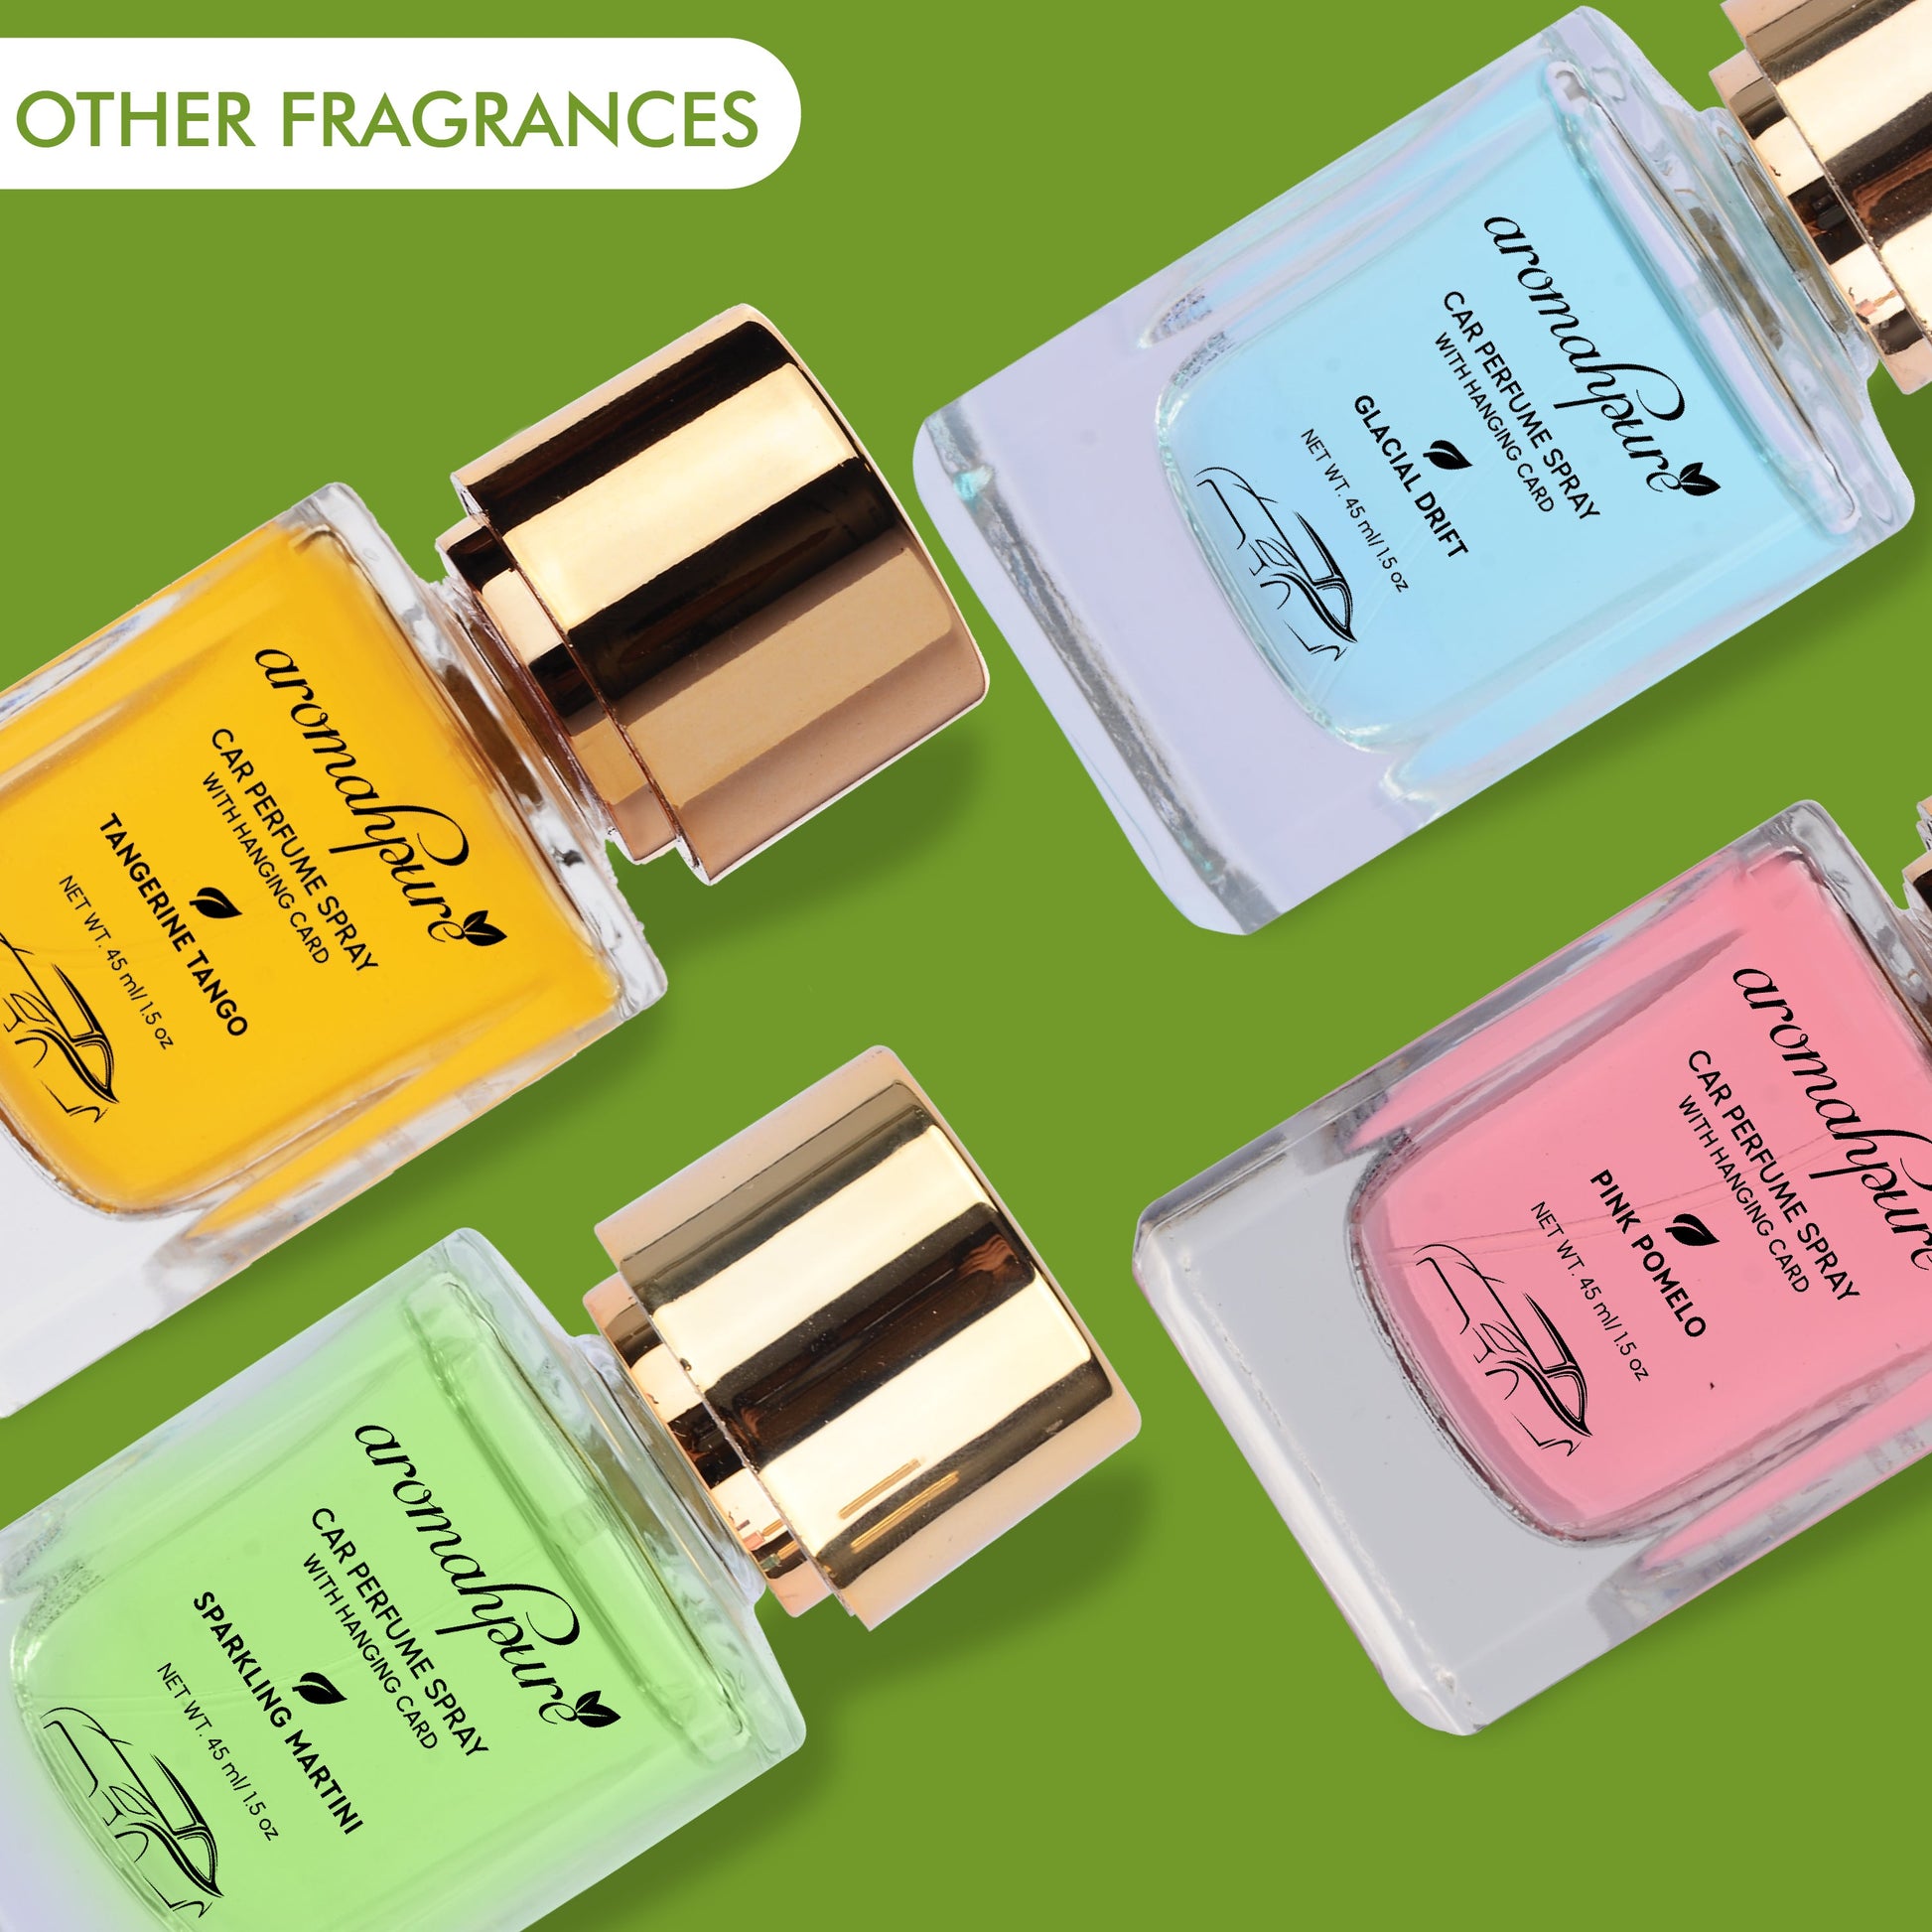 Buy Long Lasting Car Perfume Spray with Hanging Card (Lemon and Mint) –  Aromahpure